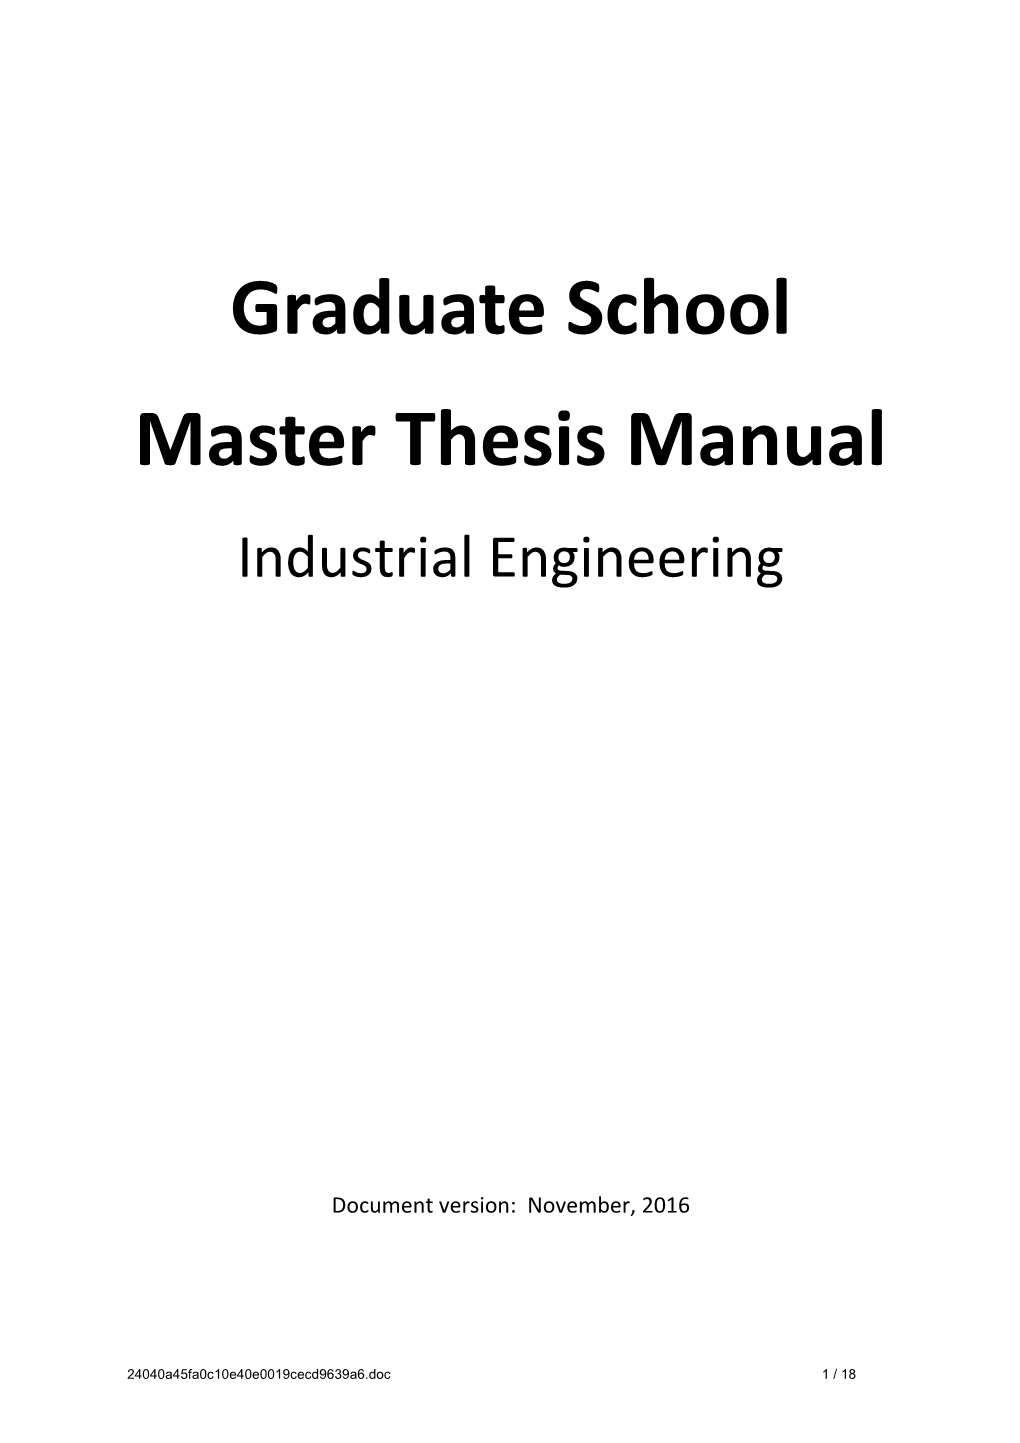 Master Thesis Manual